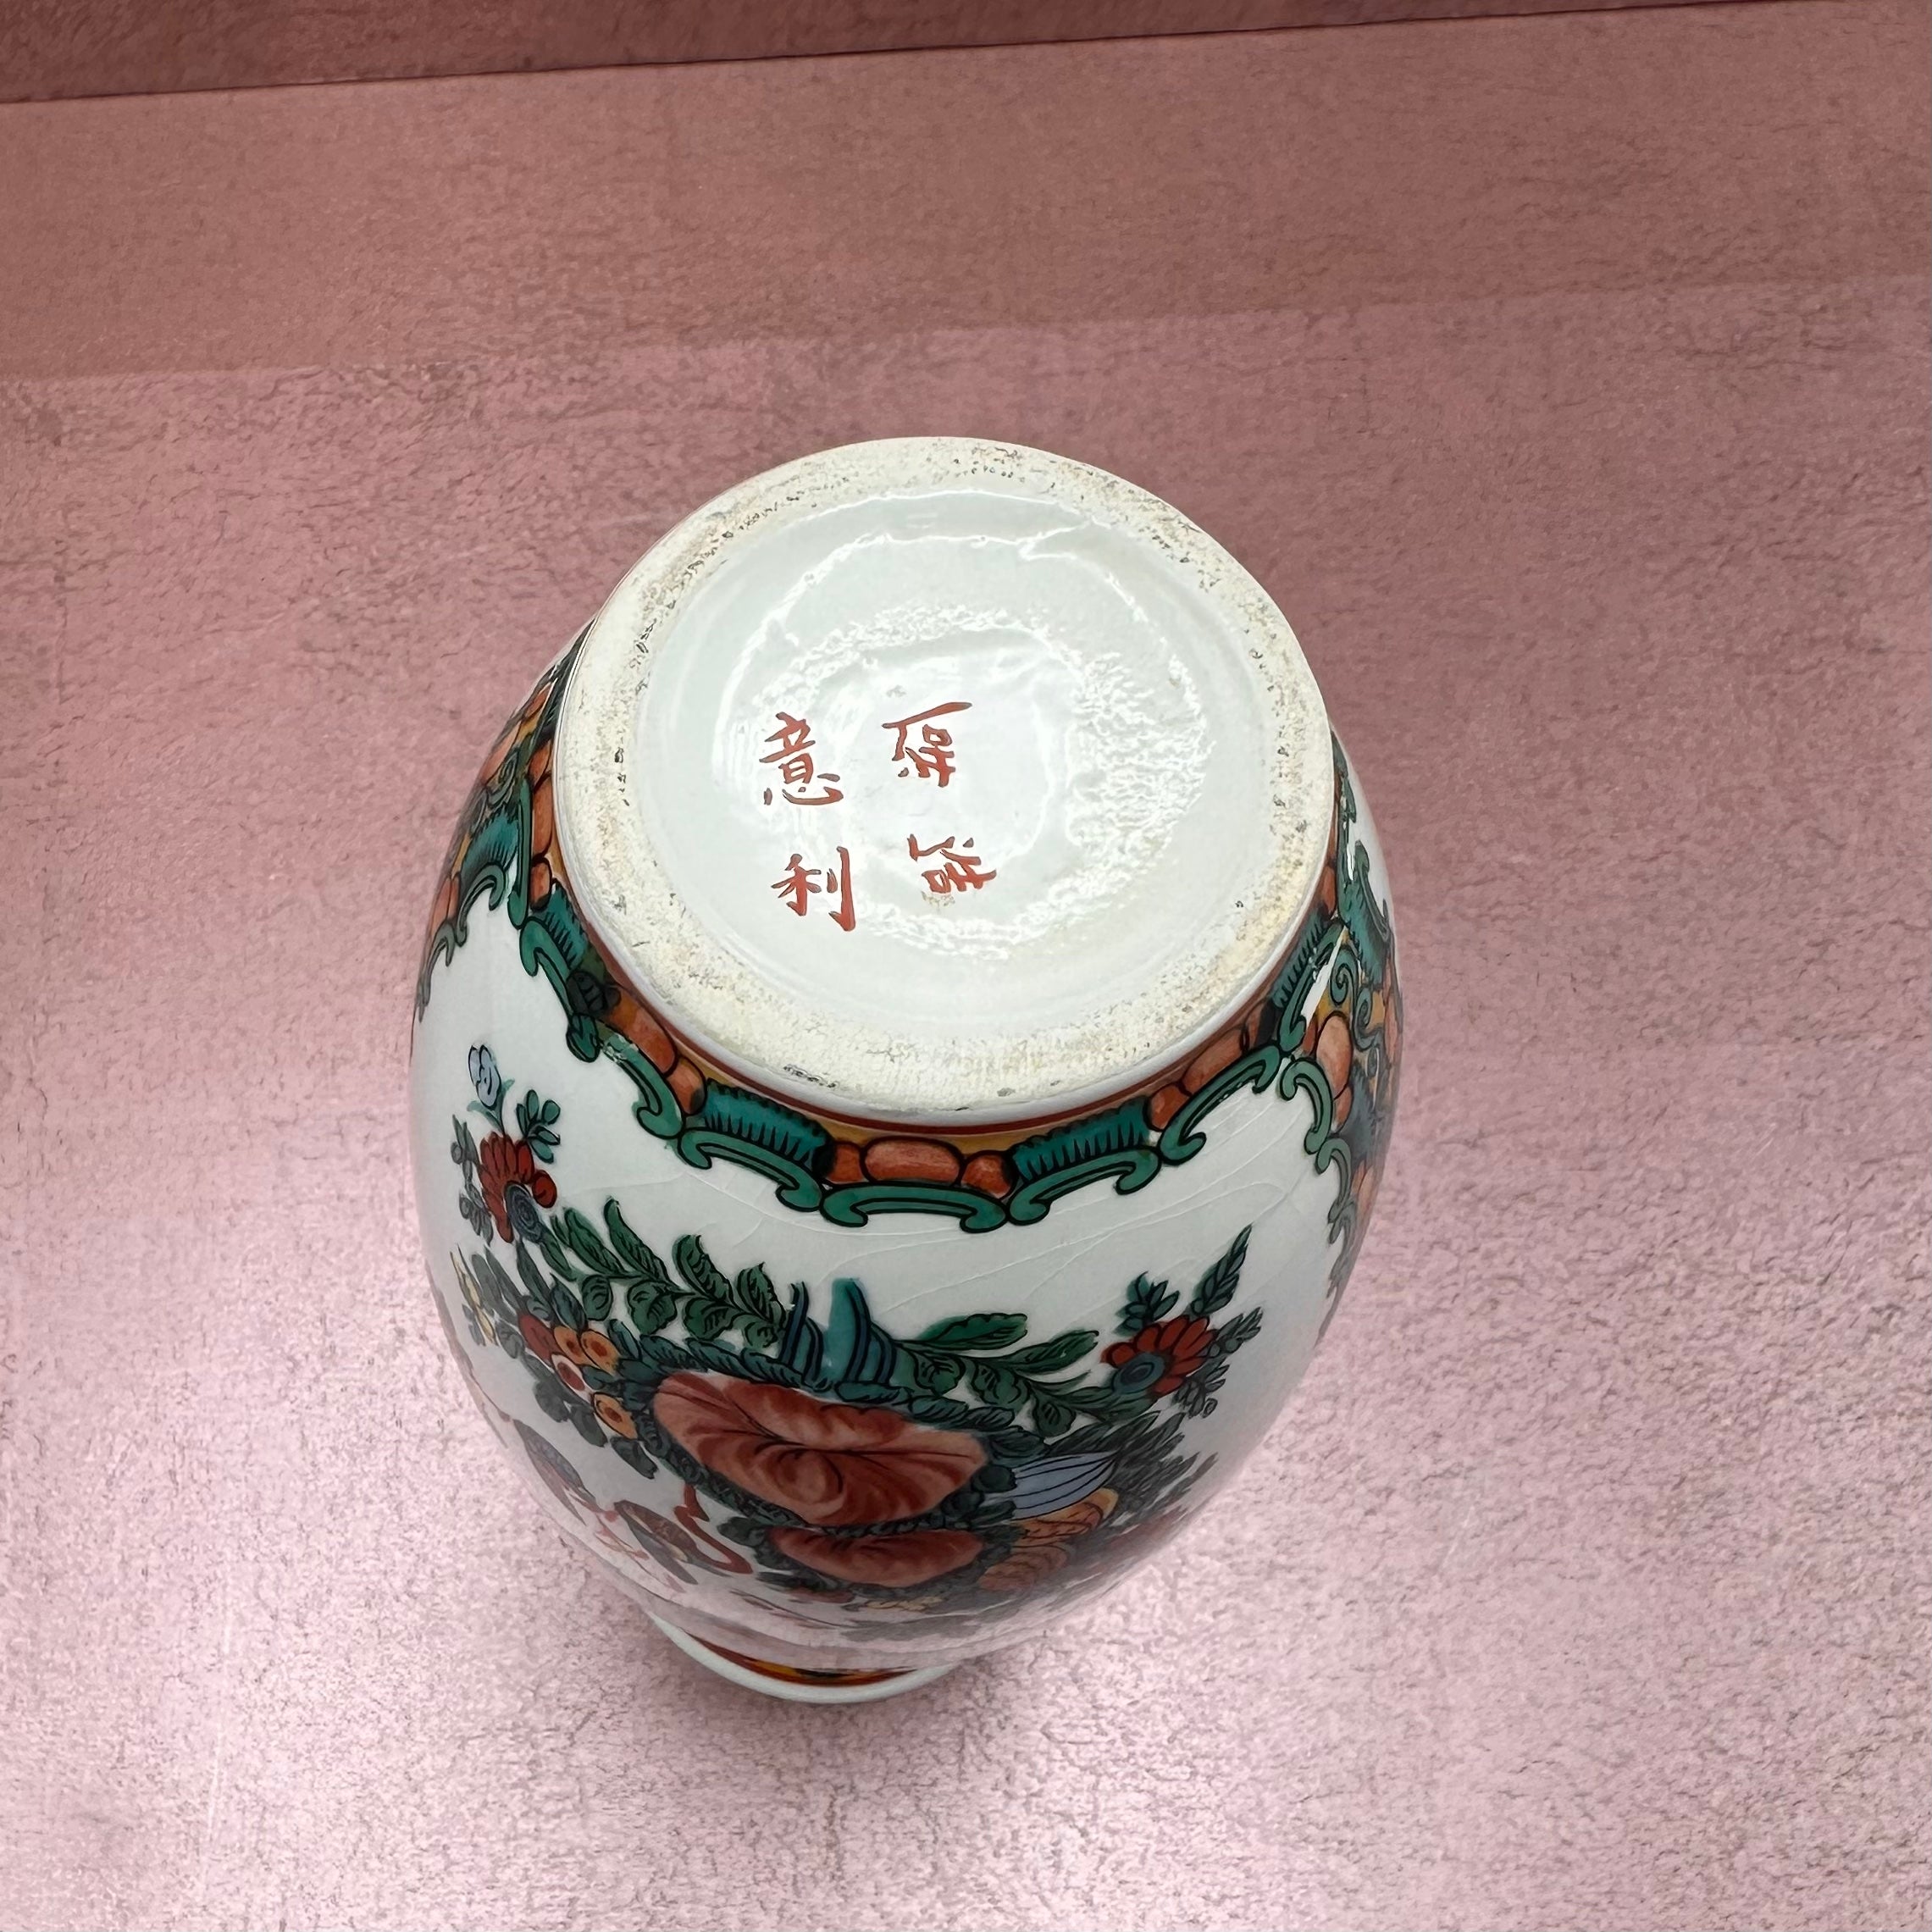 Small Familial Rose Vase